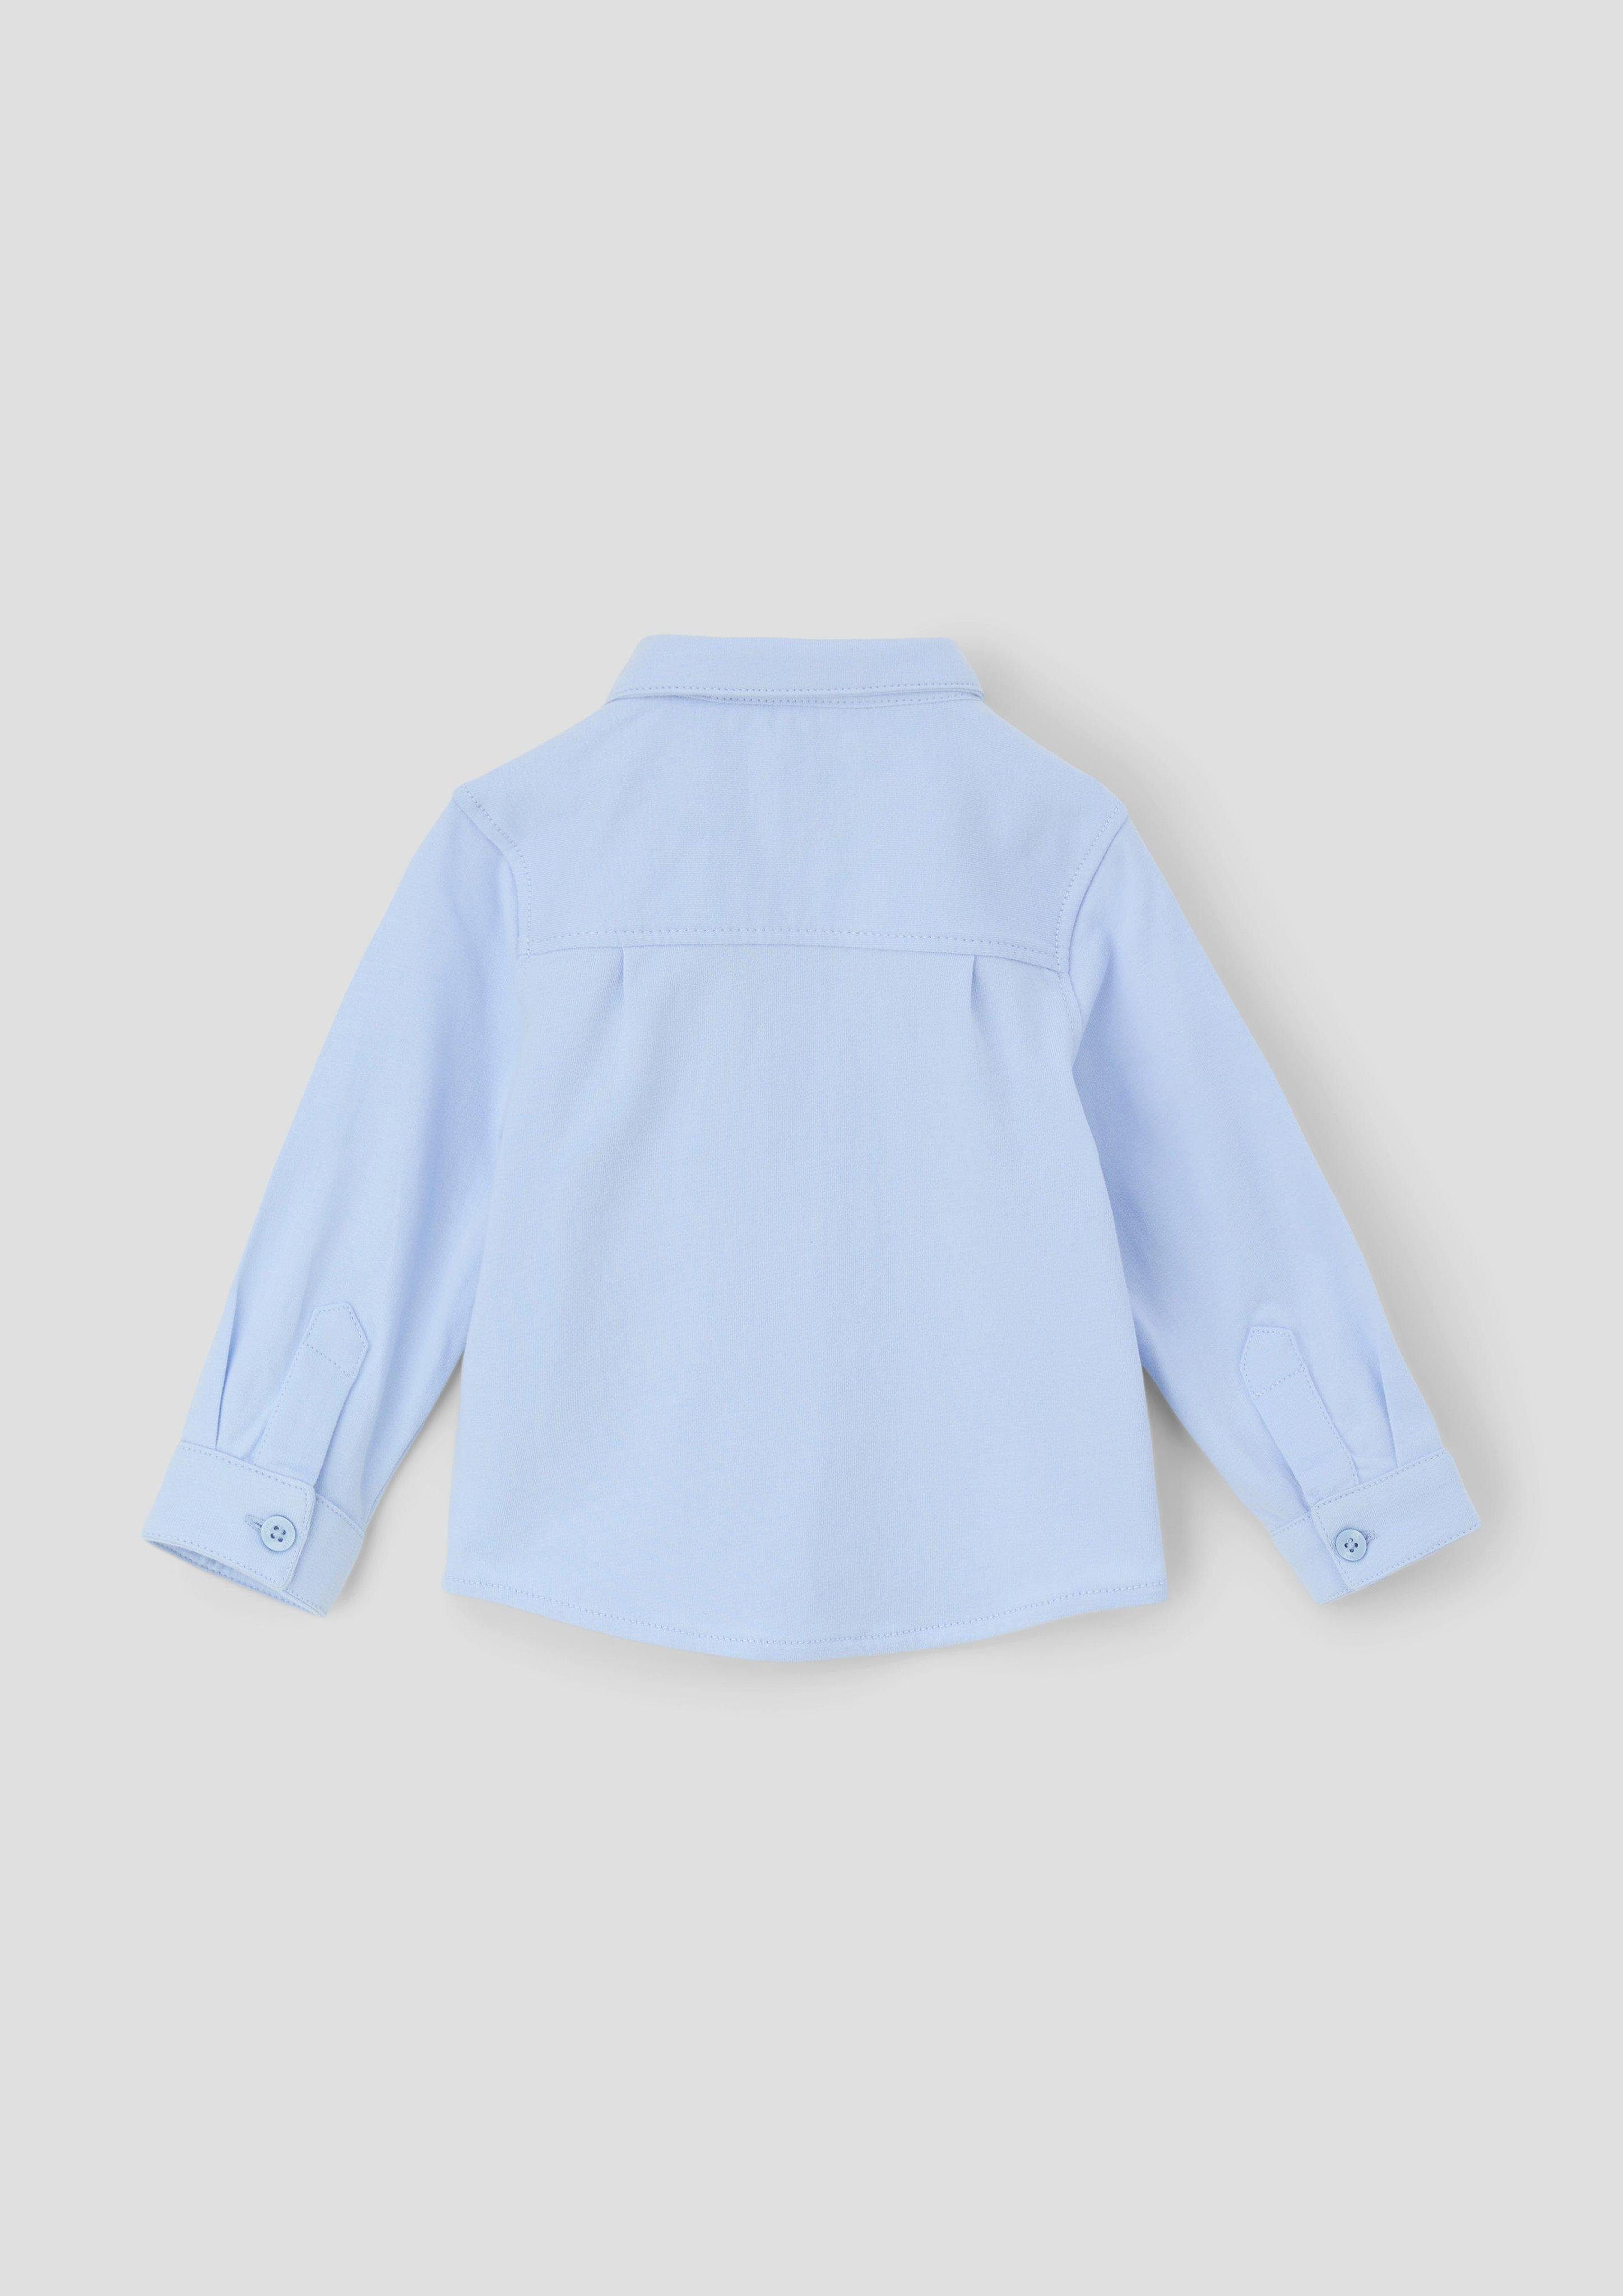 s.Oliver Langarmhemd Regular: Hemd mit abnehmbarer Schleife Fliege hellblau